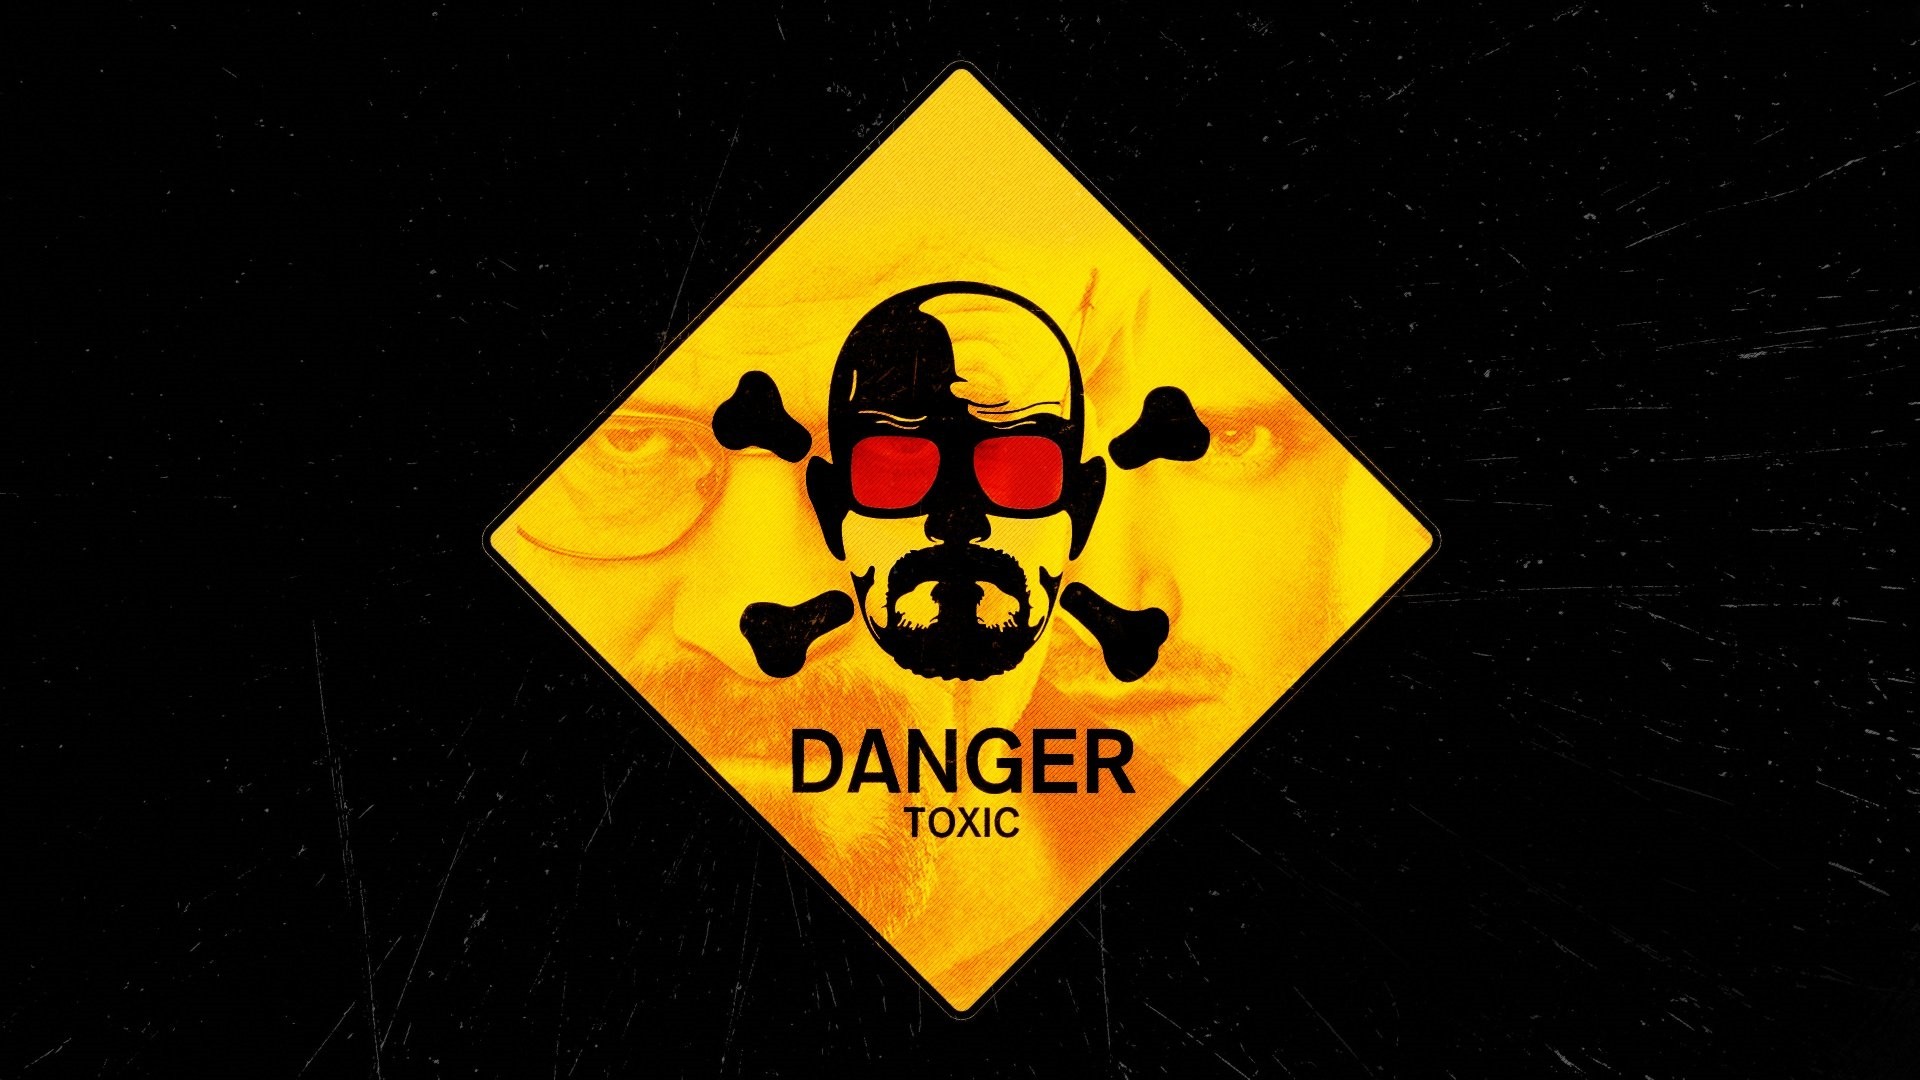 Danger wallpaper image hd